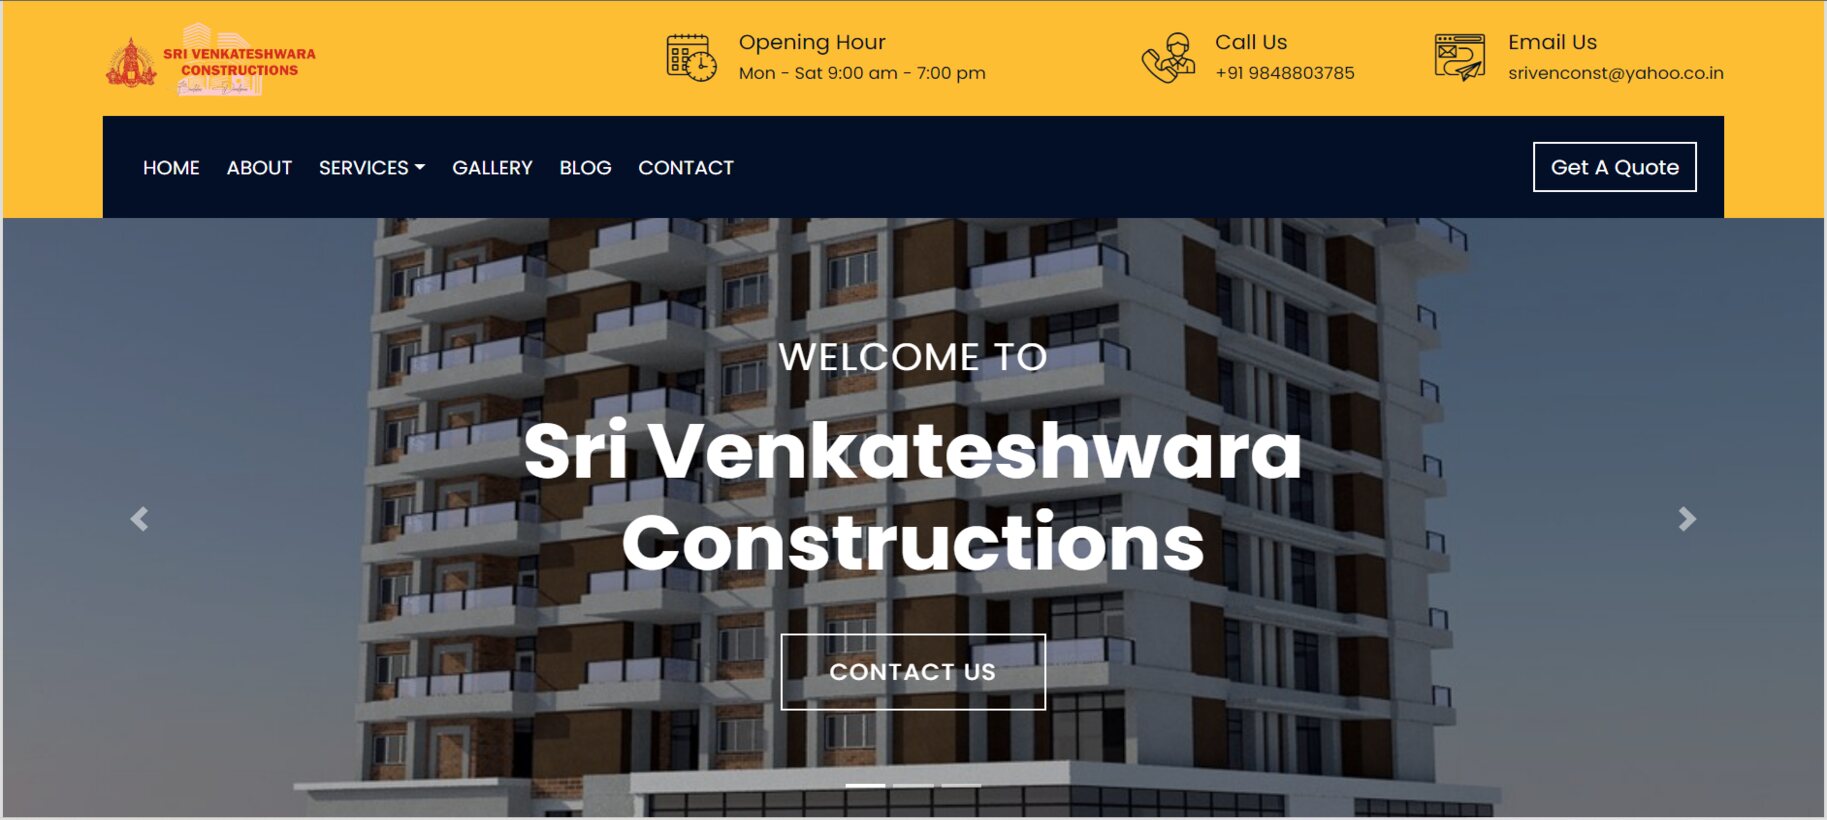 Sri-Venkateshwara_image_BSIT_Software_Services_Web_And_App_Development_Company_In_India